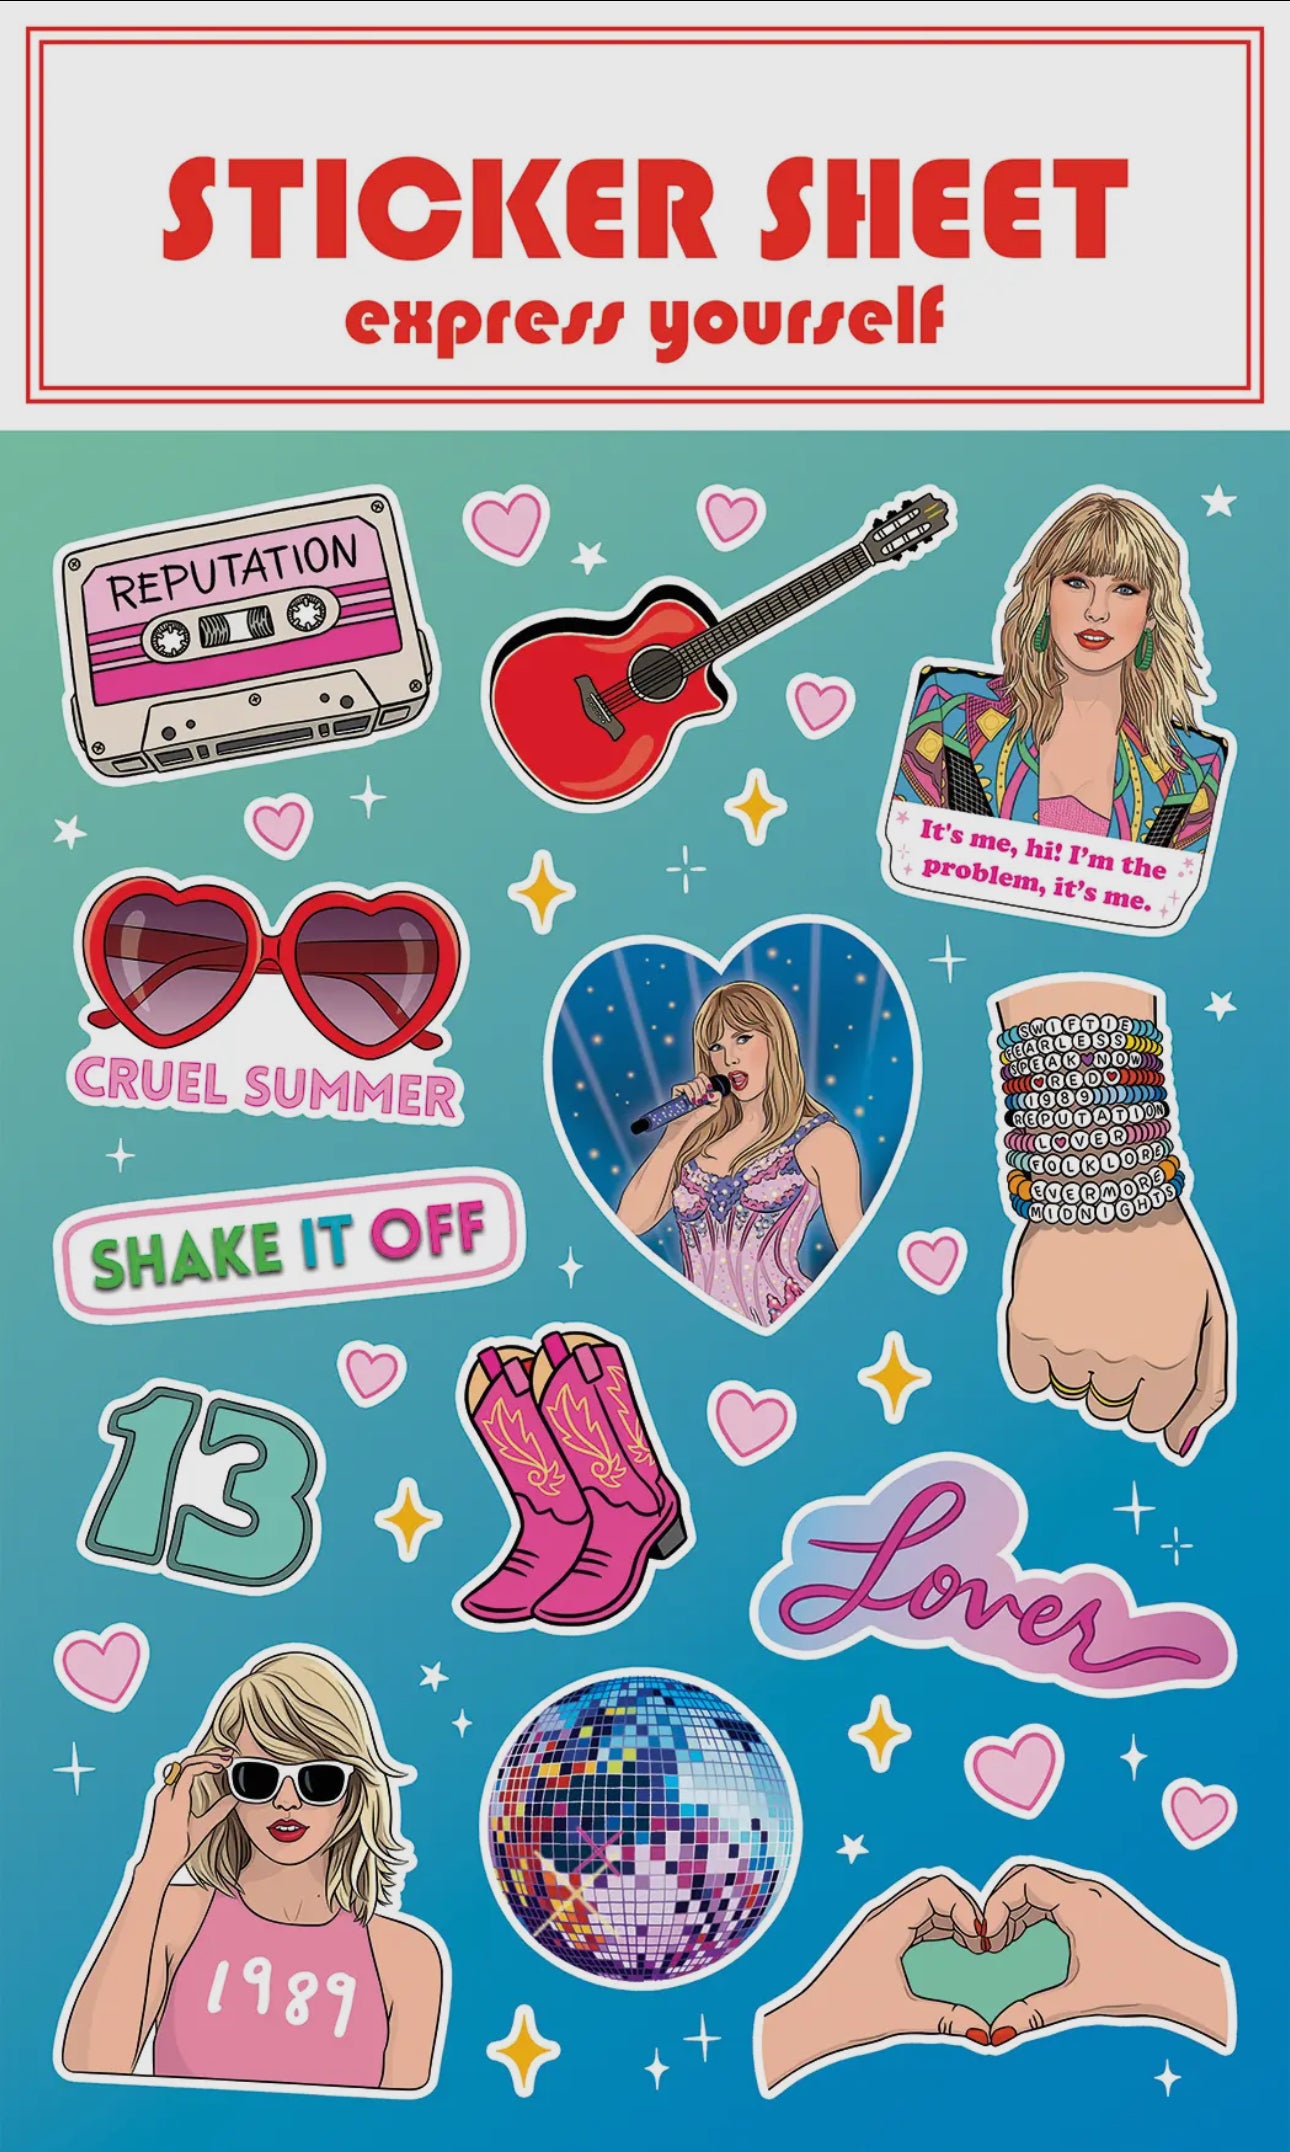 Taylor swift Sticker sheet